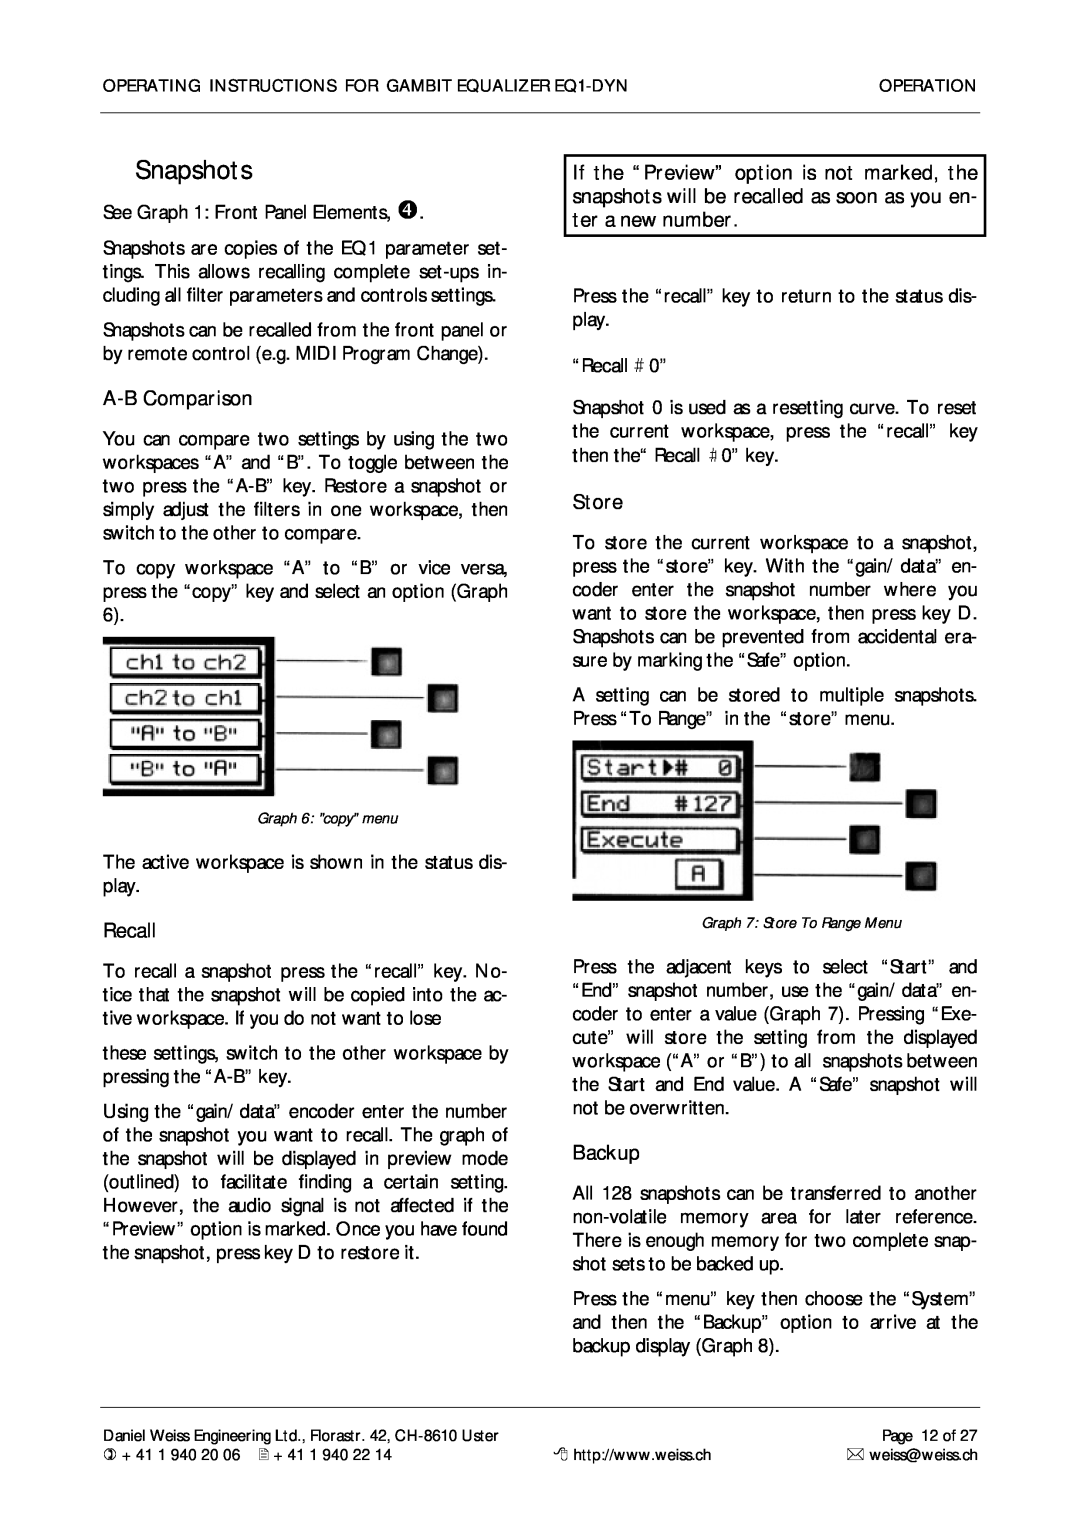 Edelweiss EQ1-DYN manual A-B Comparison, Recall, Store, Backup, Snapshots 